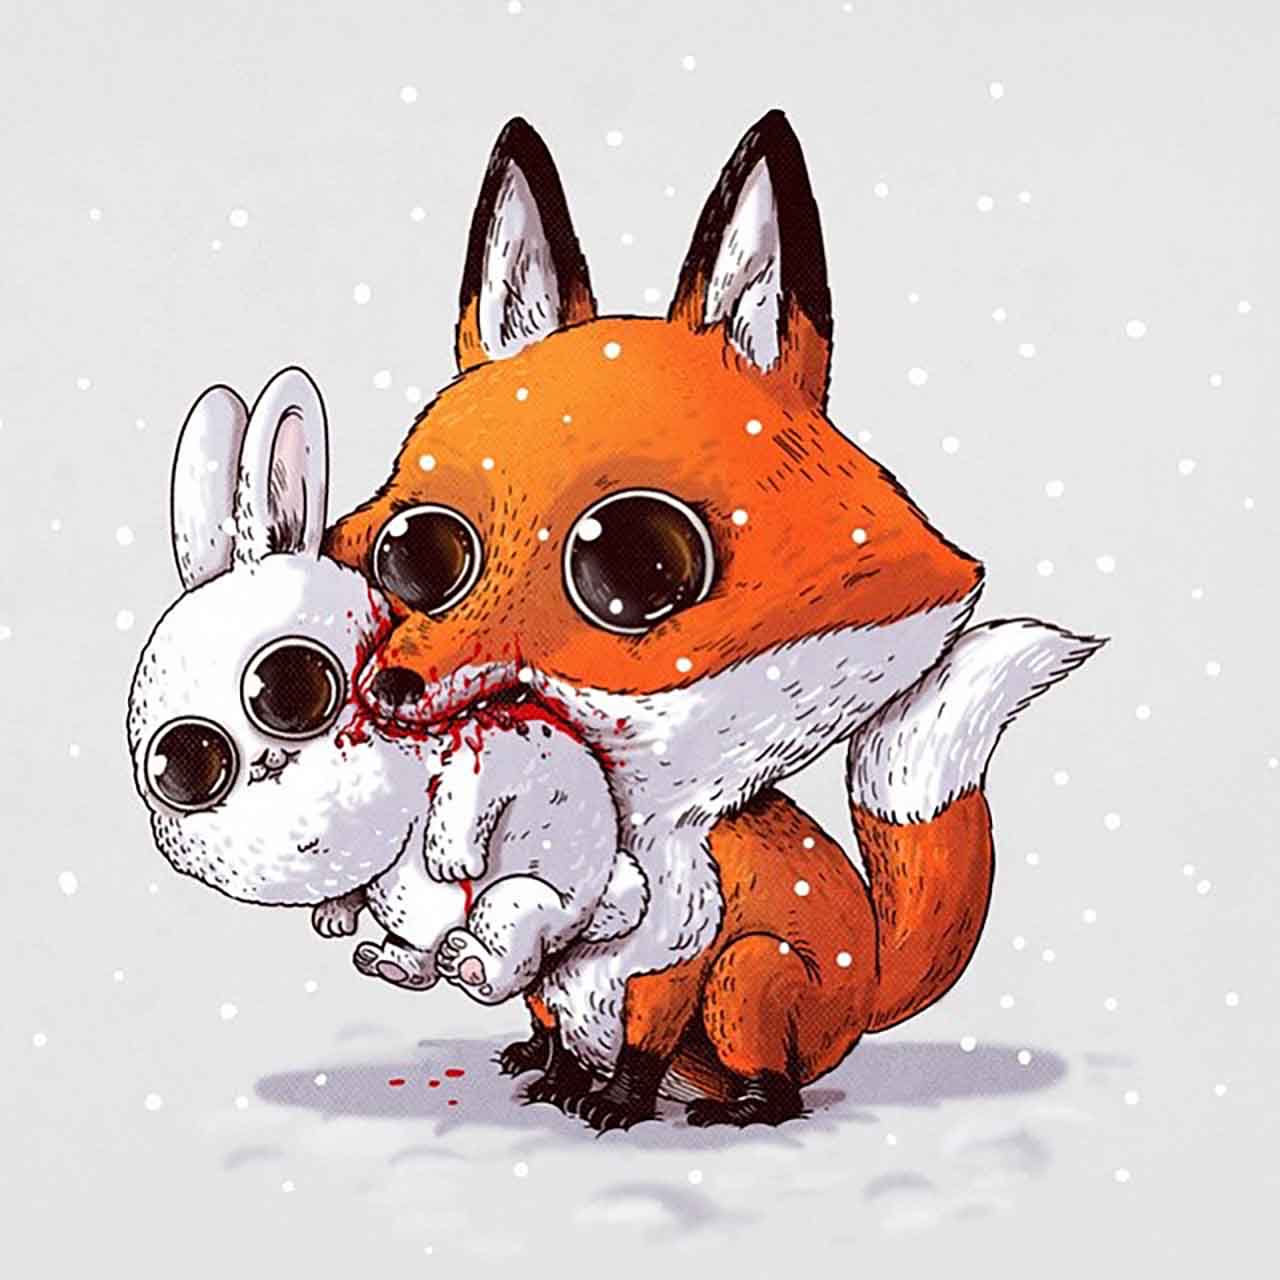  Artist Creates Extremely Adorable “Predator & Prey” Illustrations #6: Fox & Rabbit 